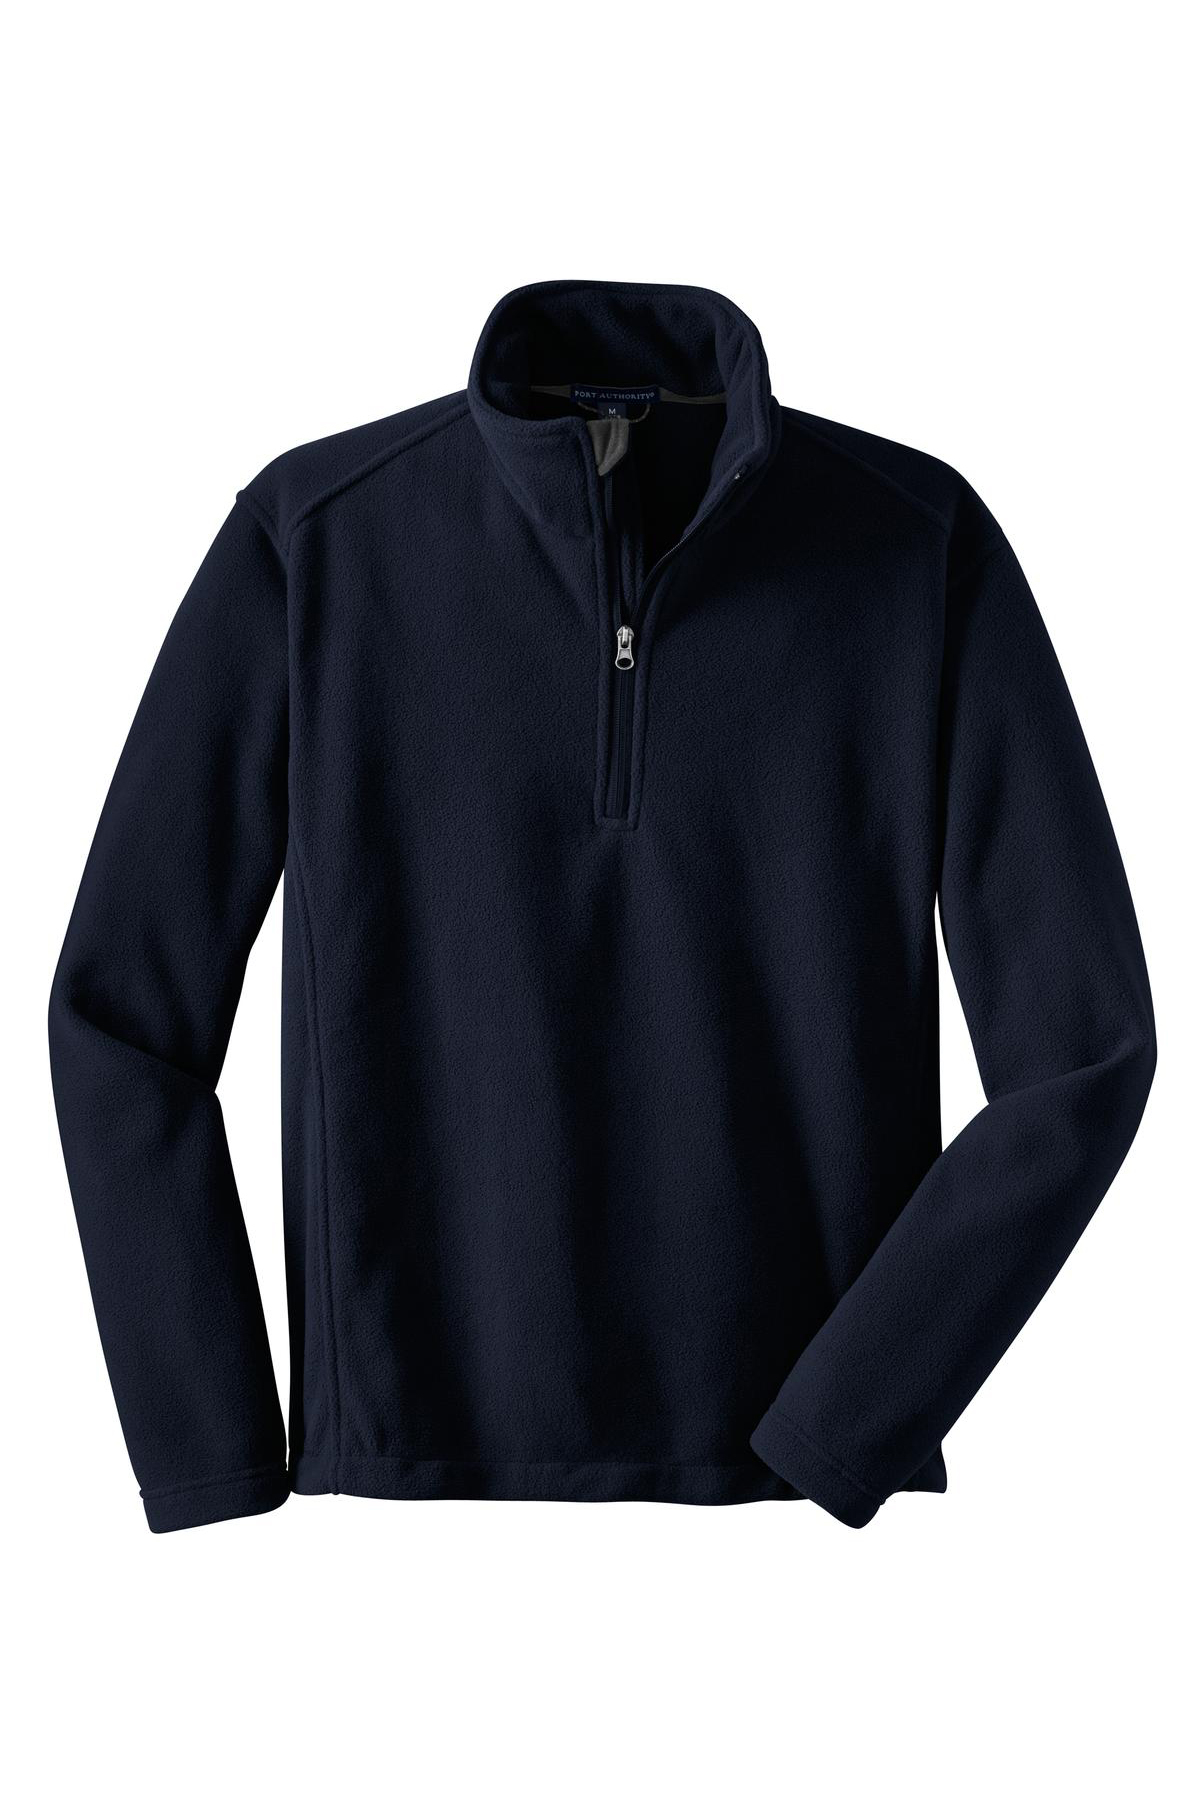 Port Authority Value Fleece 1/4-Zip Pullover, Product